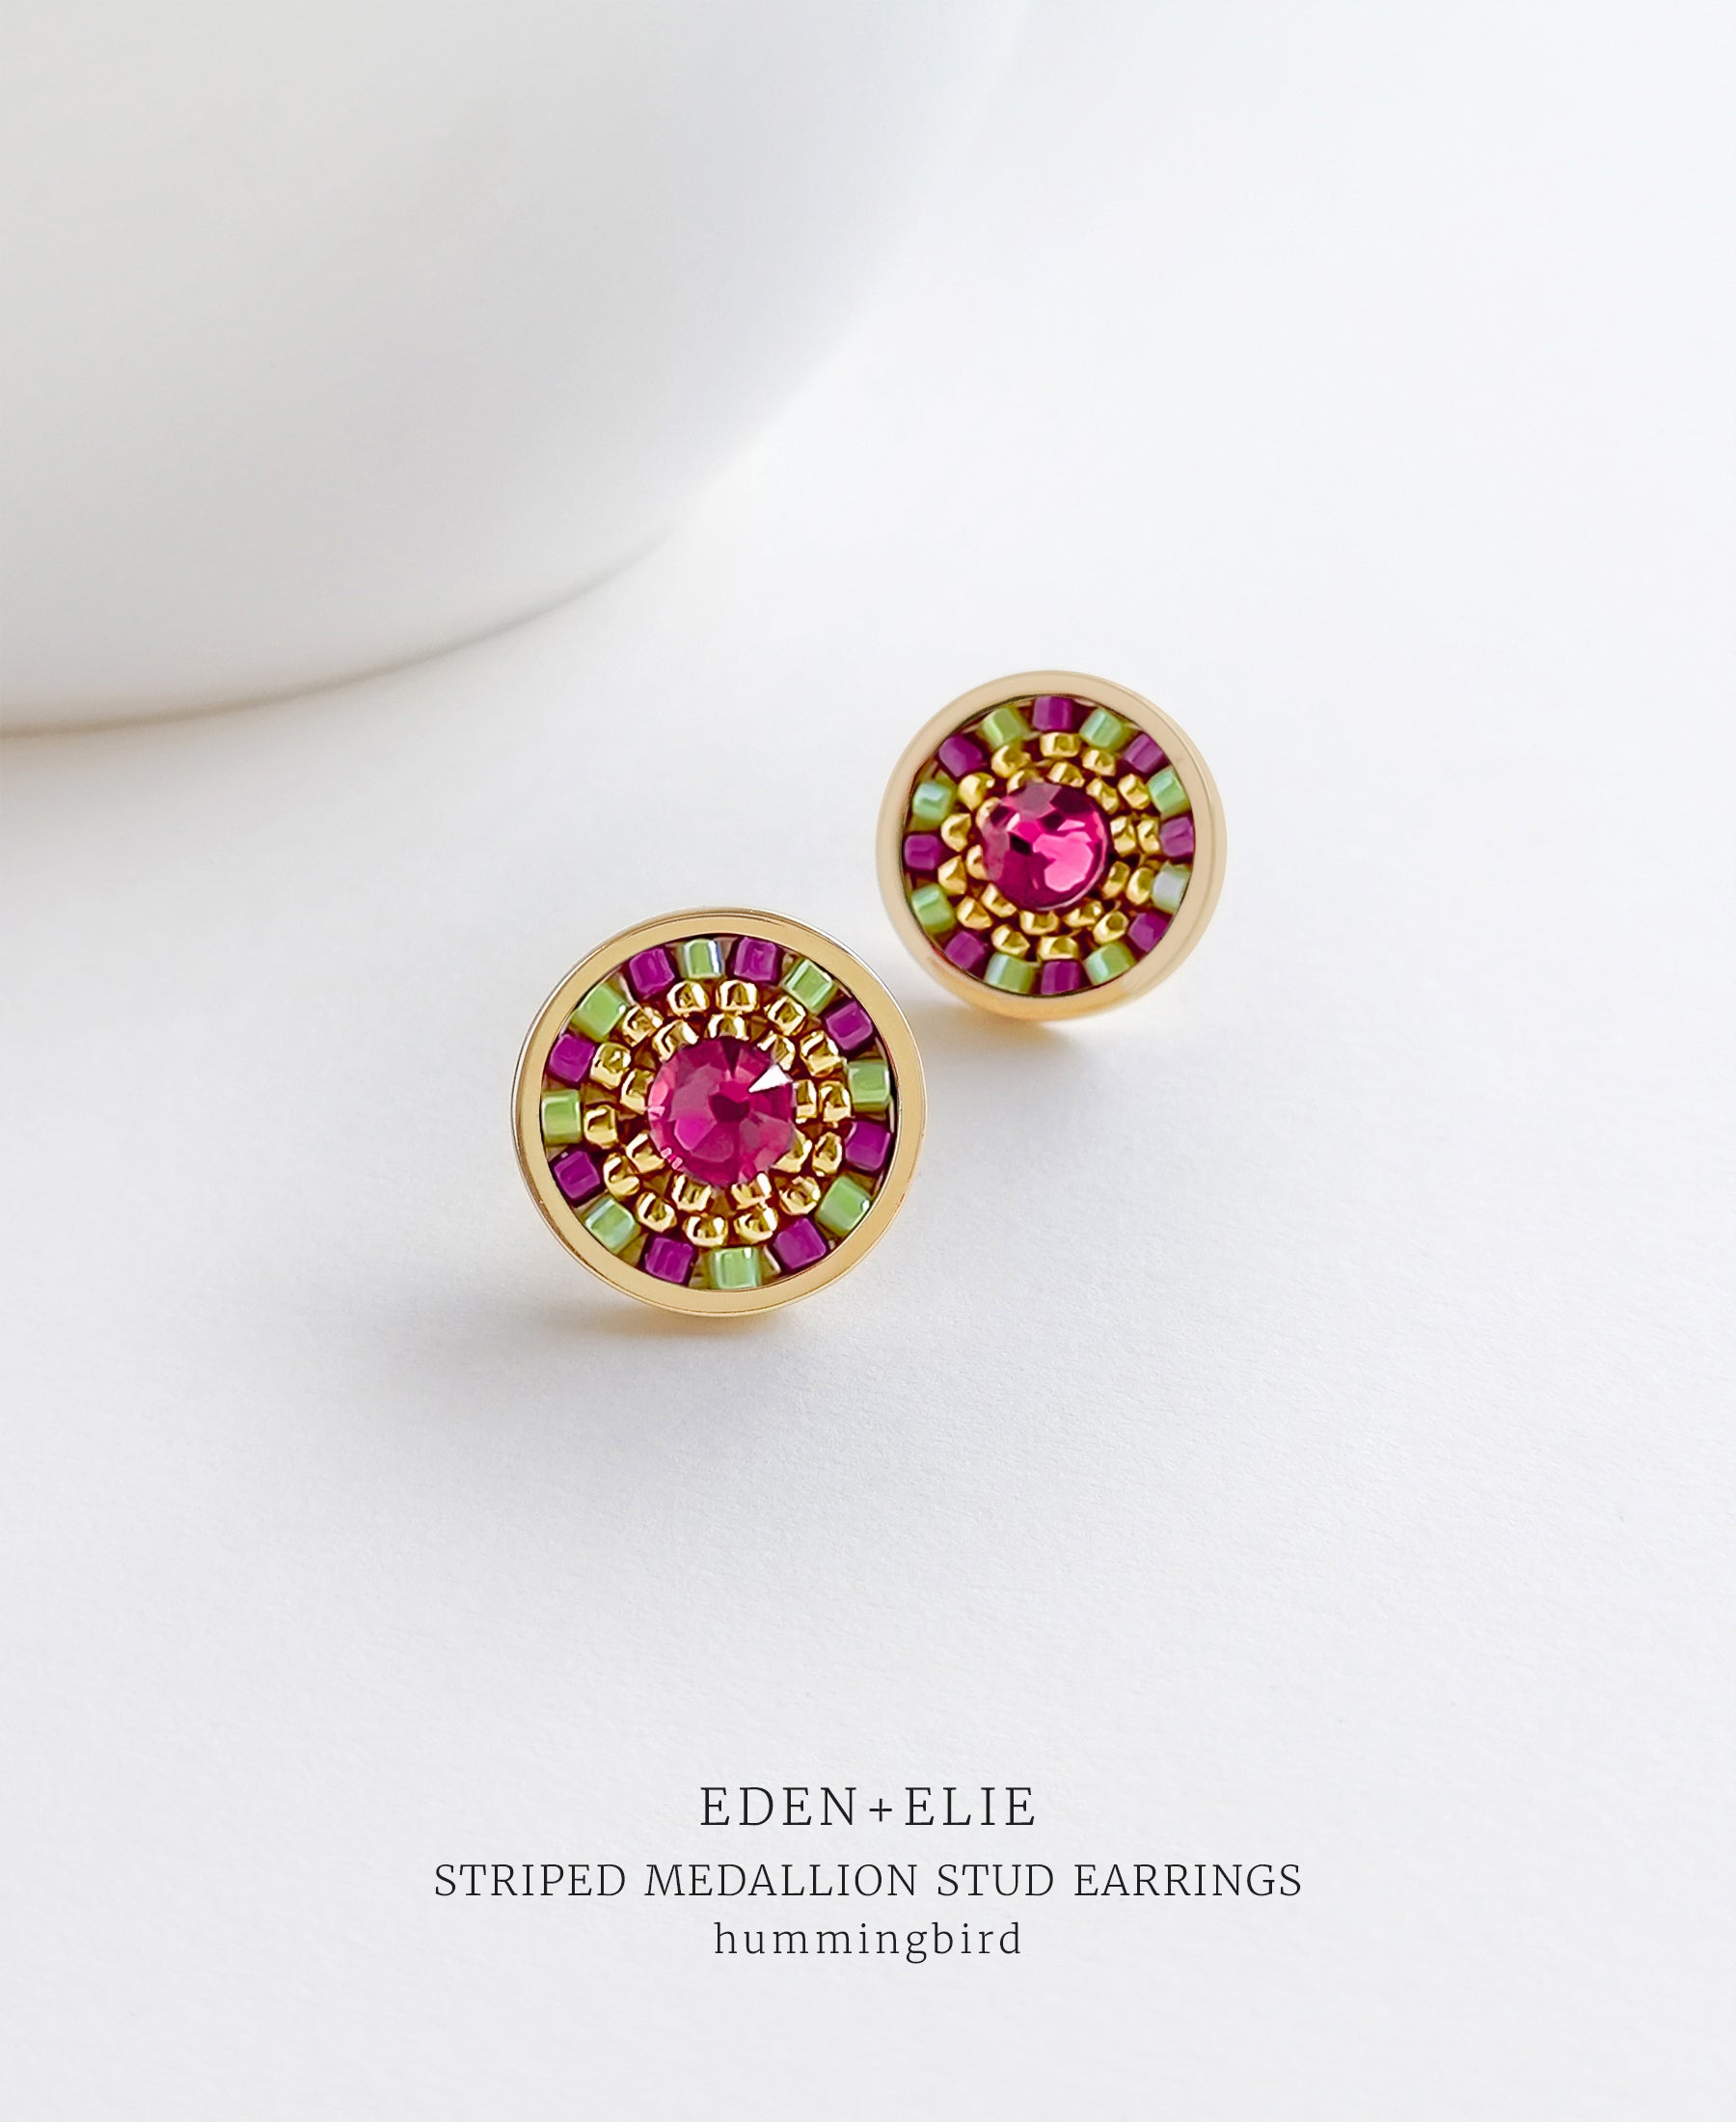 EDEN + ELIE Striped Medallion stud earrings - Hummingbird